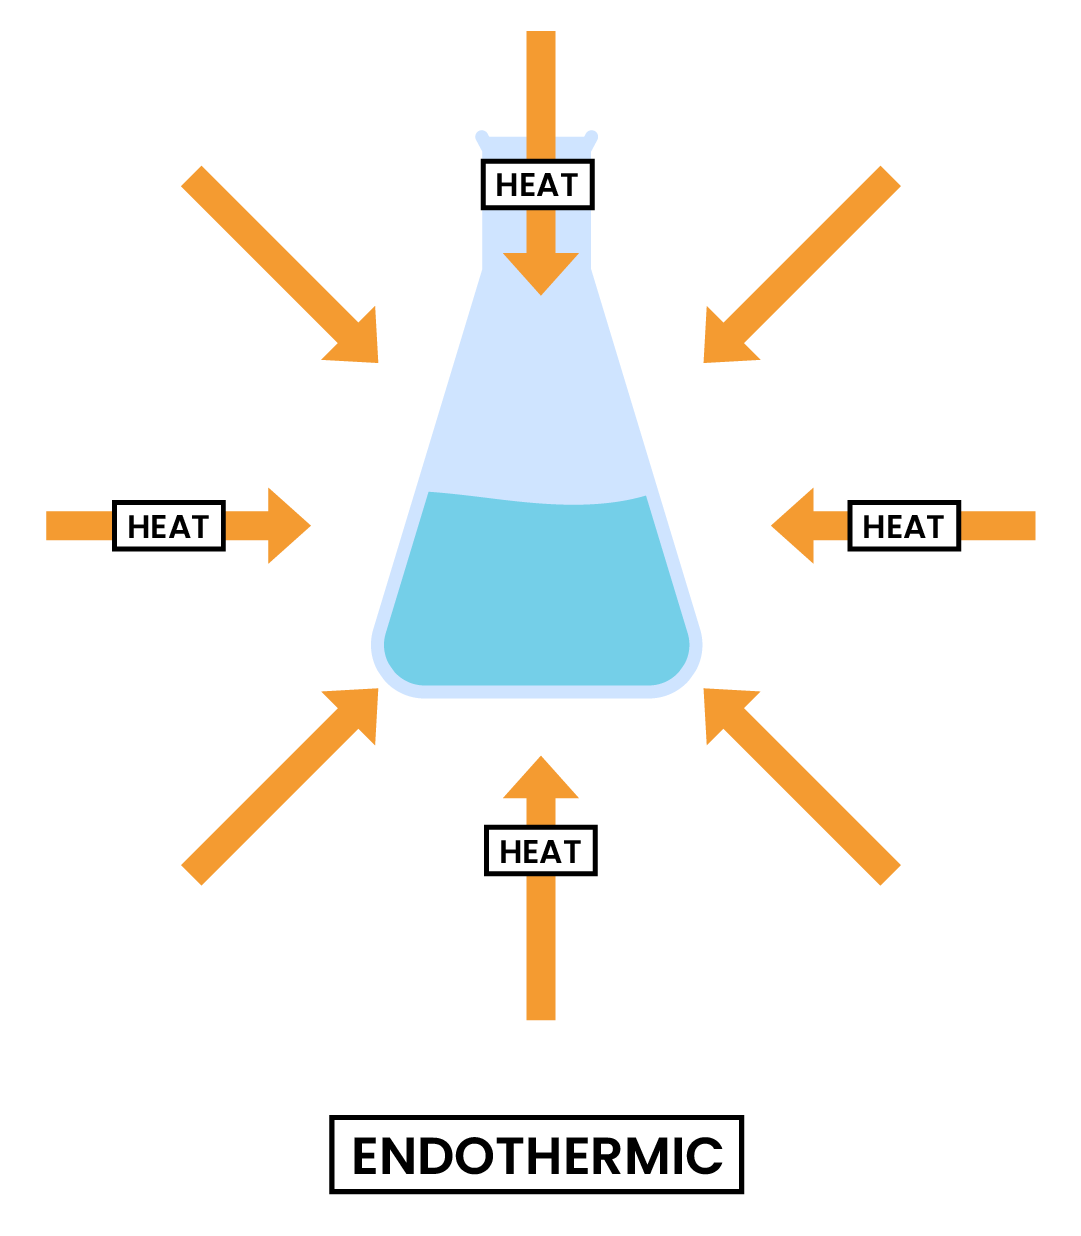 edexcel_igcse_chemistry_topic 18_energetics_002_endothermic reaction diagram labelled